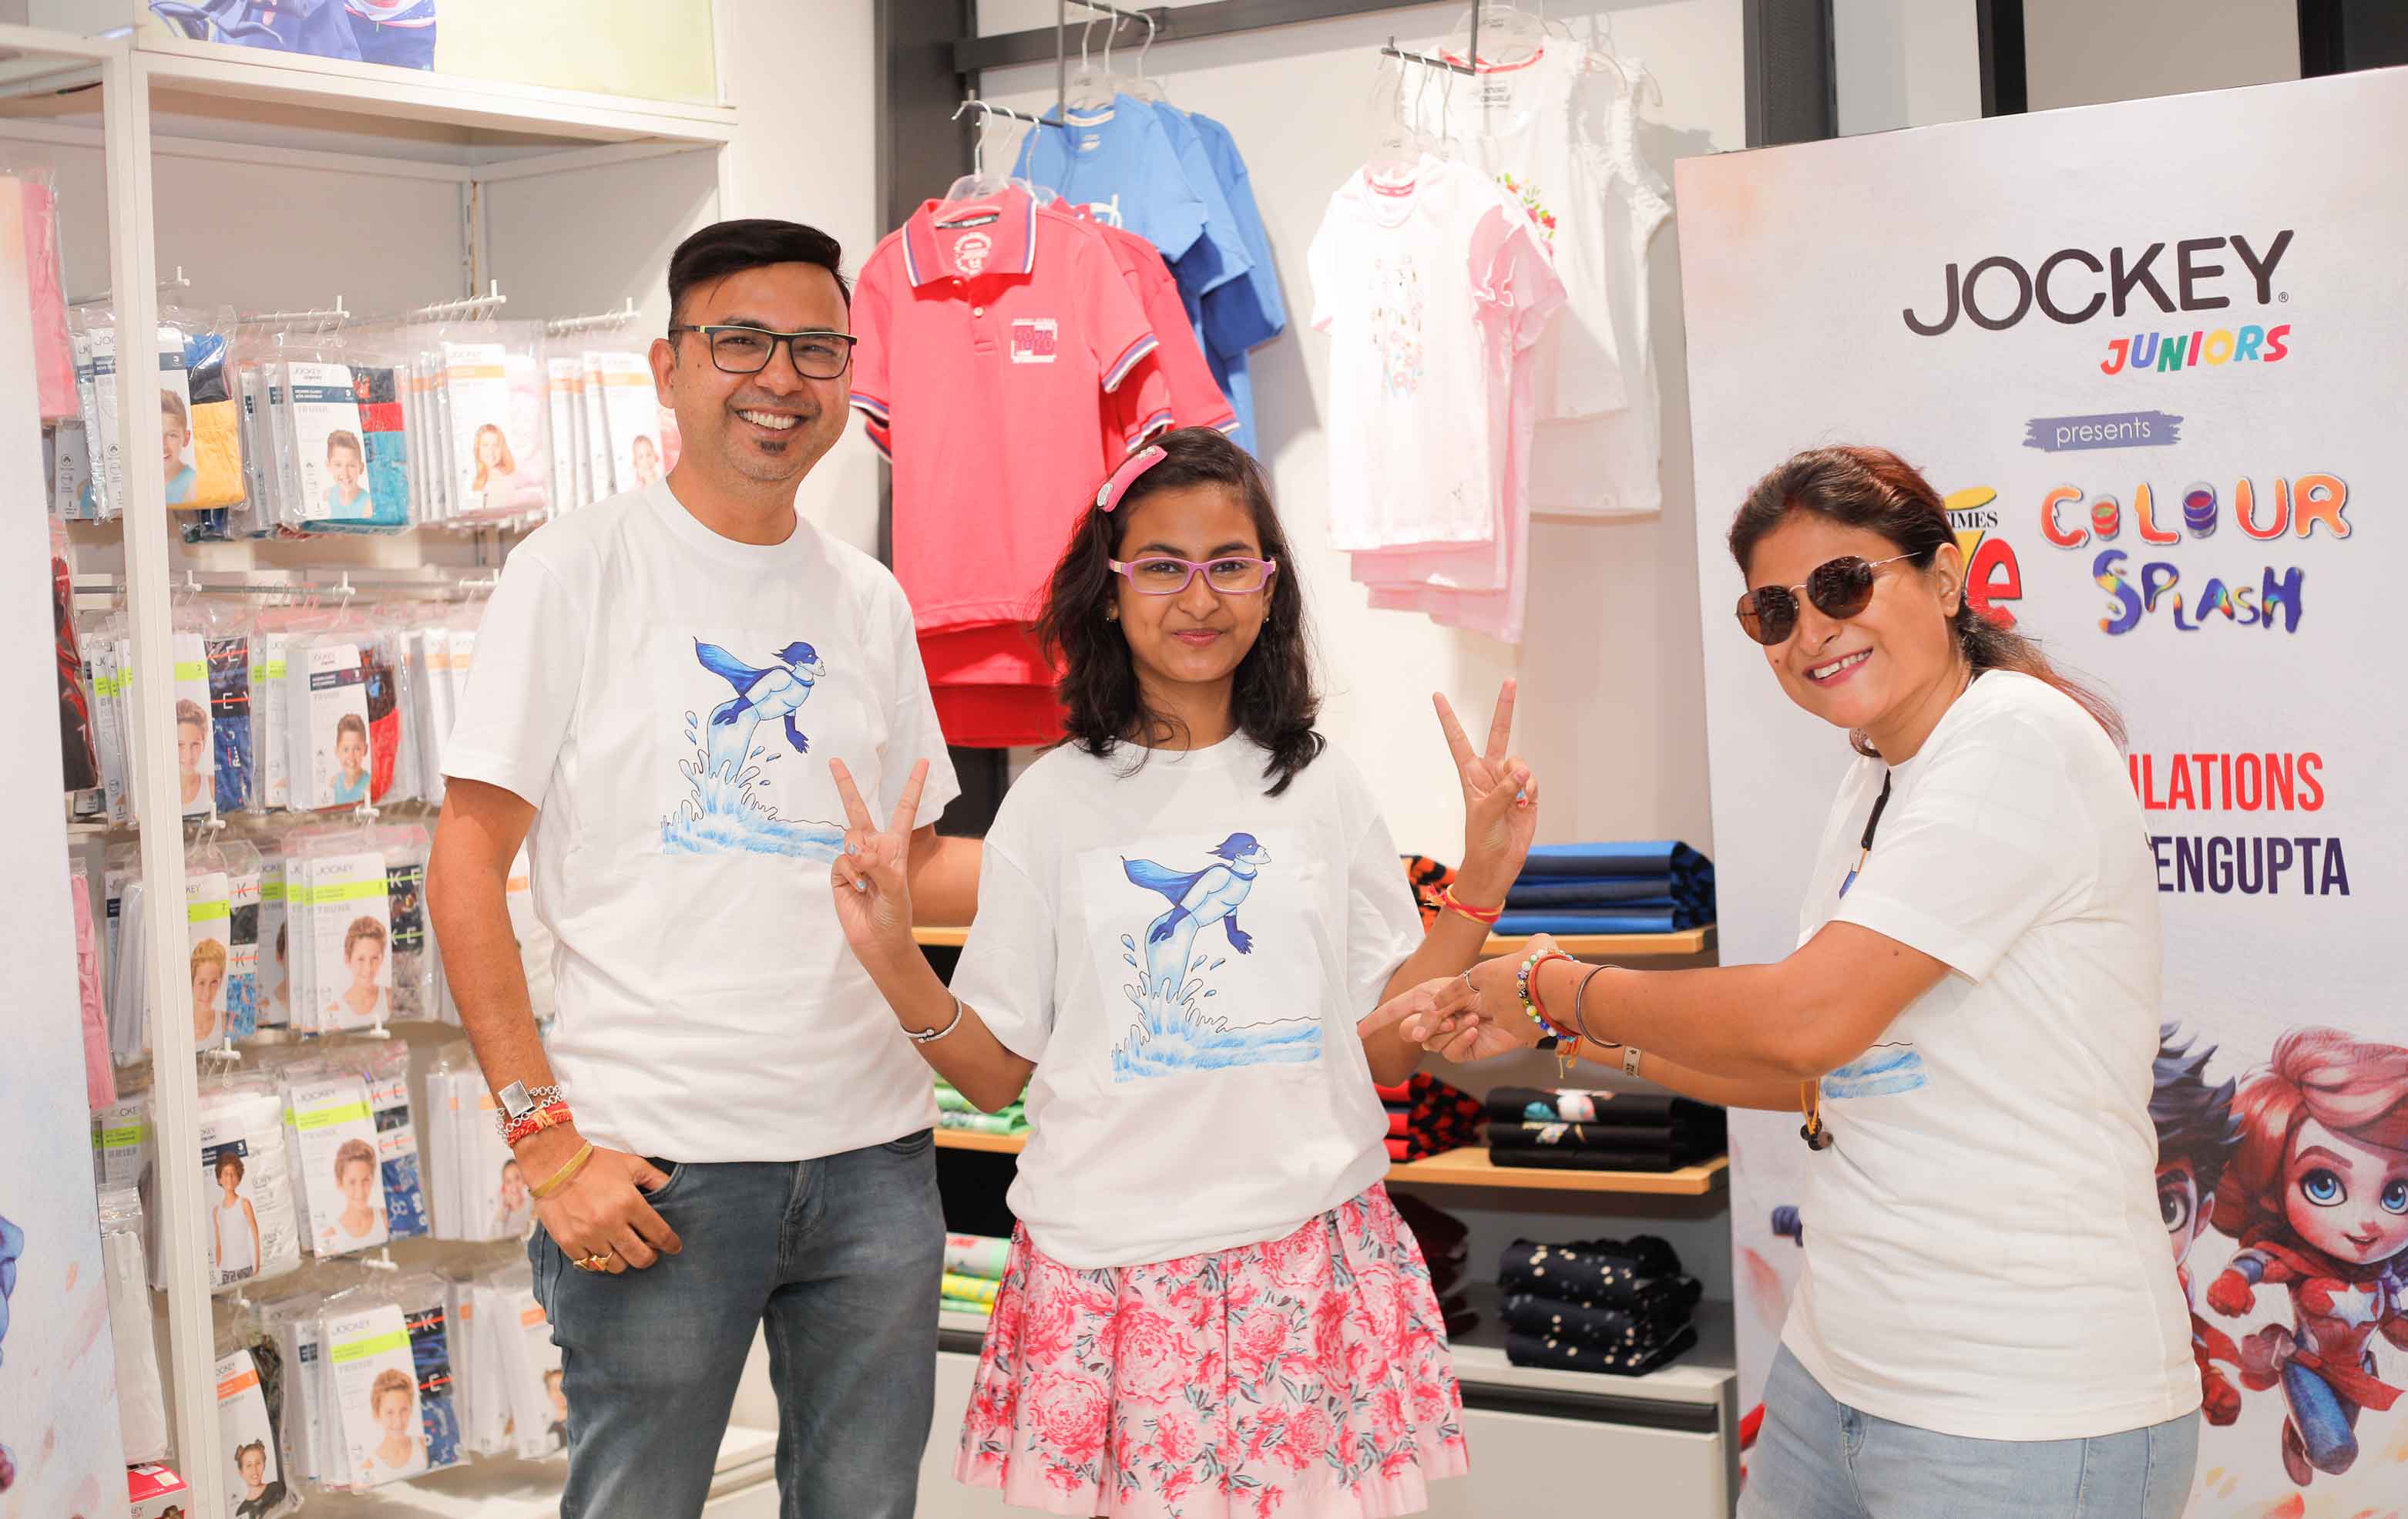 Jockey Juniors Times NIE Colour Splash campaign winners announced